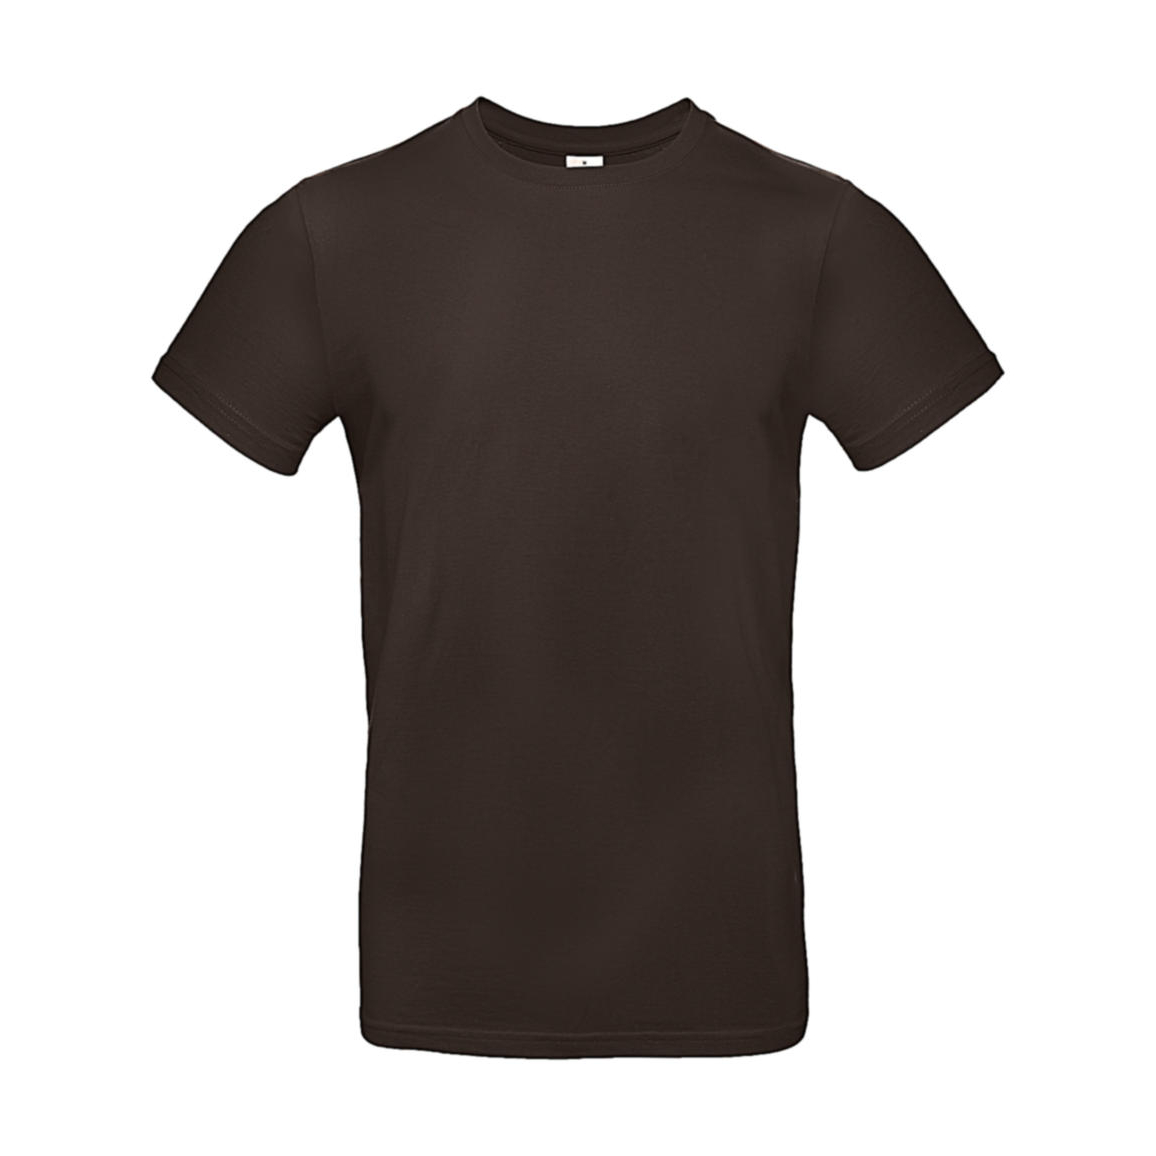 Triko pánské B&C E190 T-Shirt - hnědé, XL